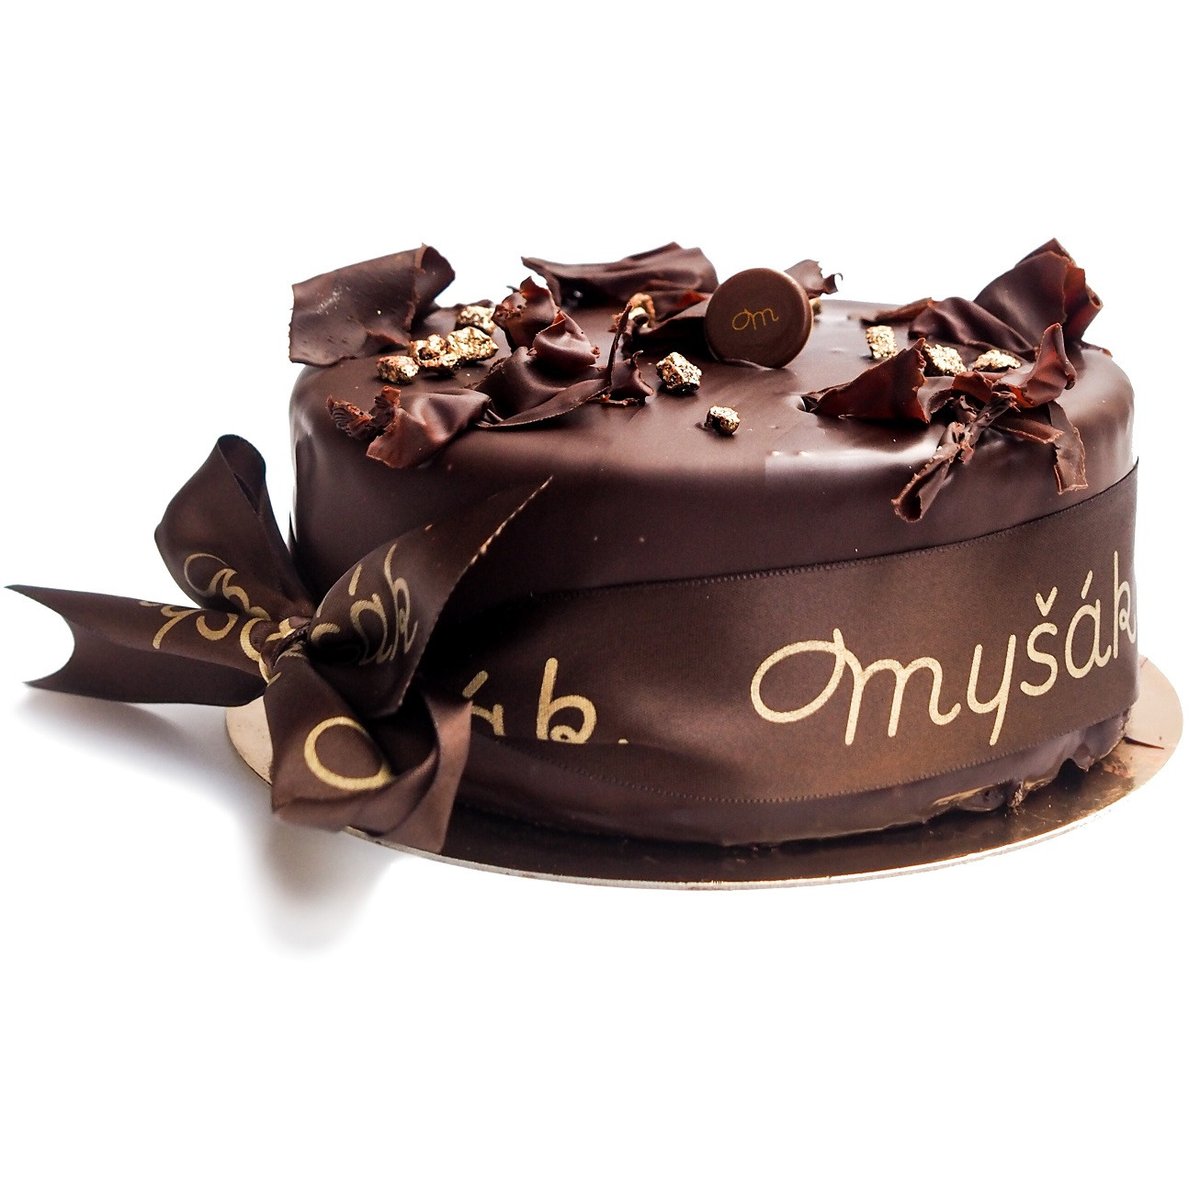 Cukrárna Myšák Macharův dort narozeninový